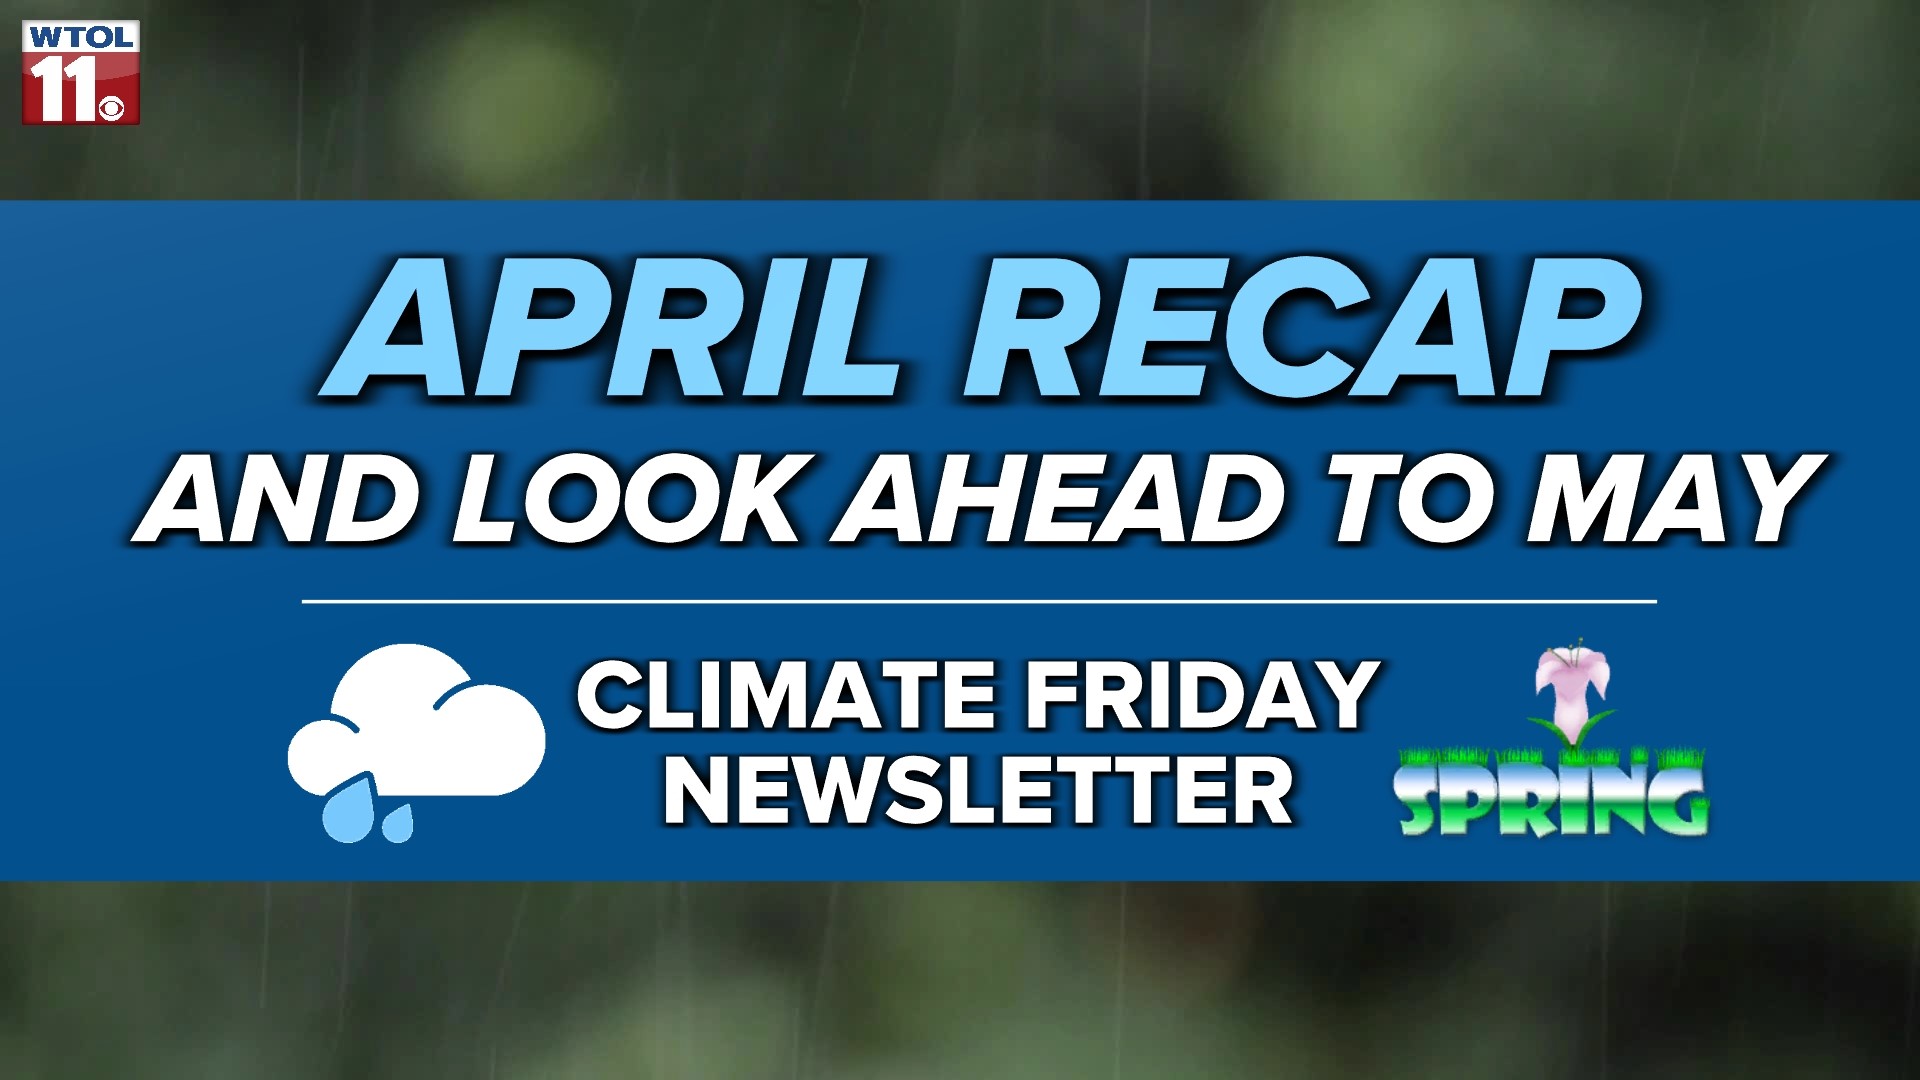 WTOL 11 Meteorologist John Burchfield previews the month ahead.